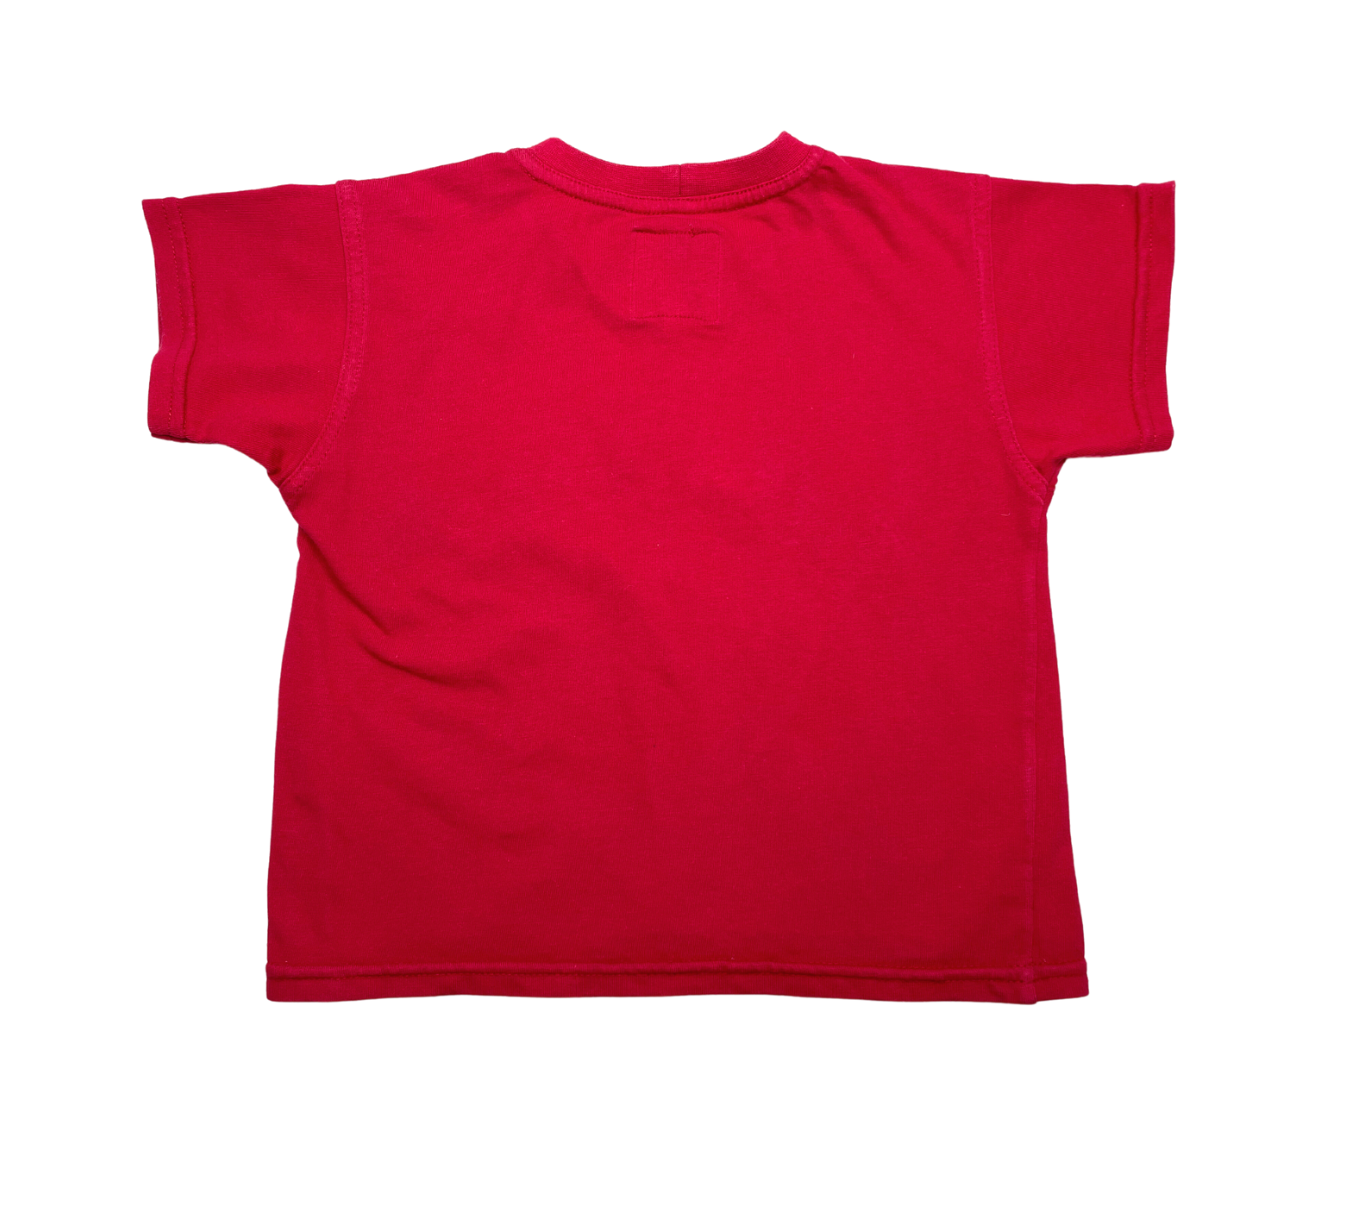 VINTAGE - T-shirt rouge Babar - 18 mois